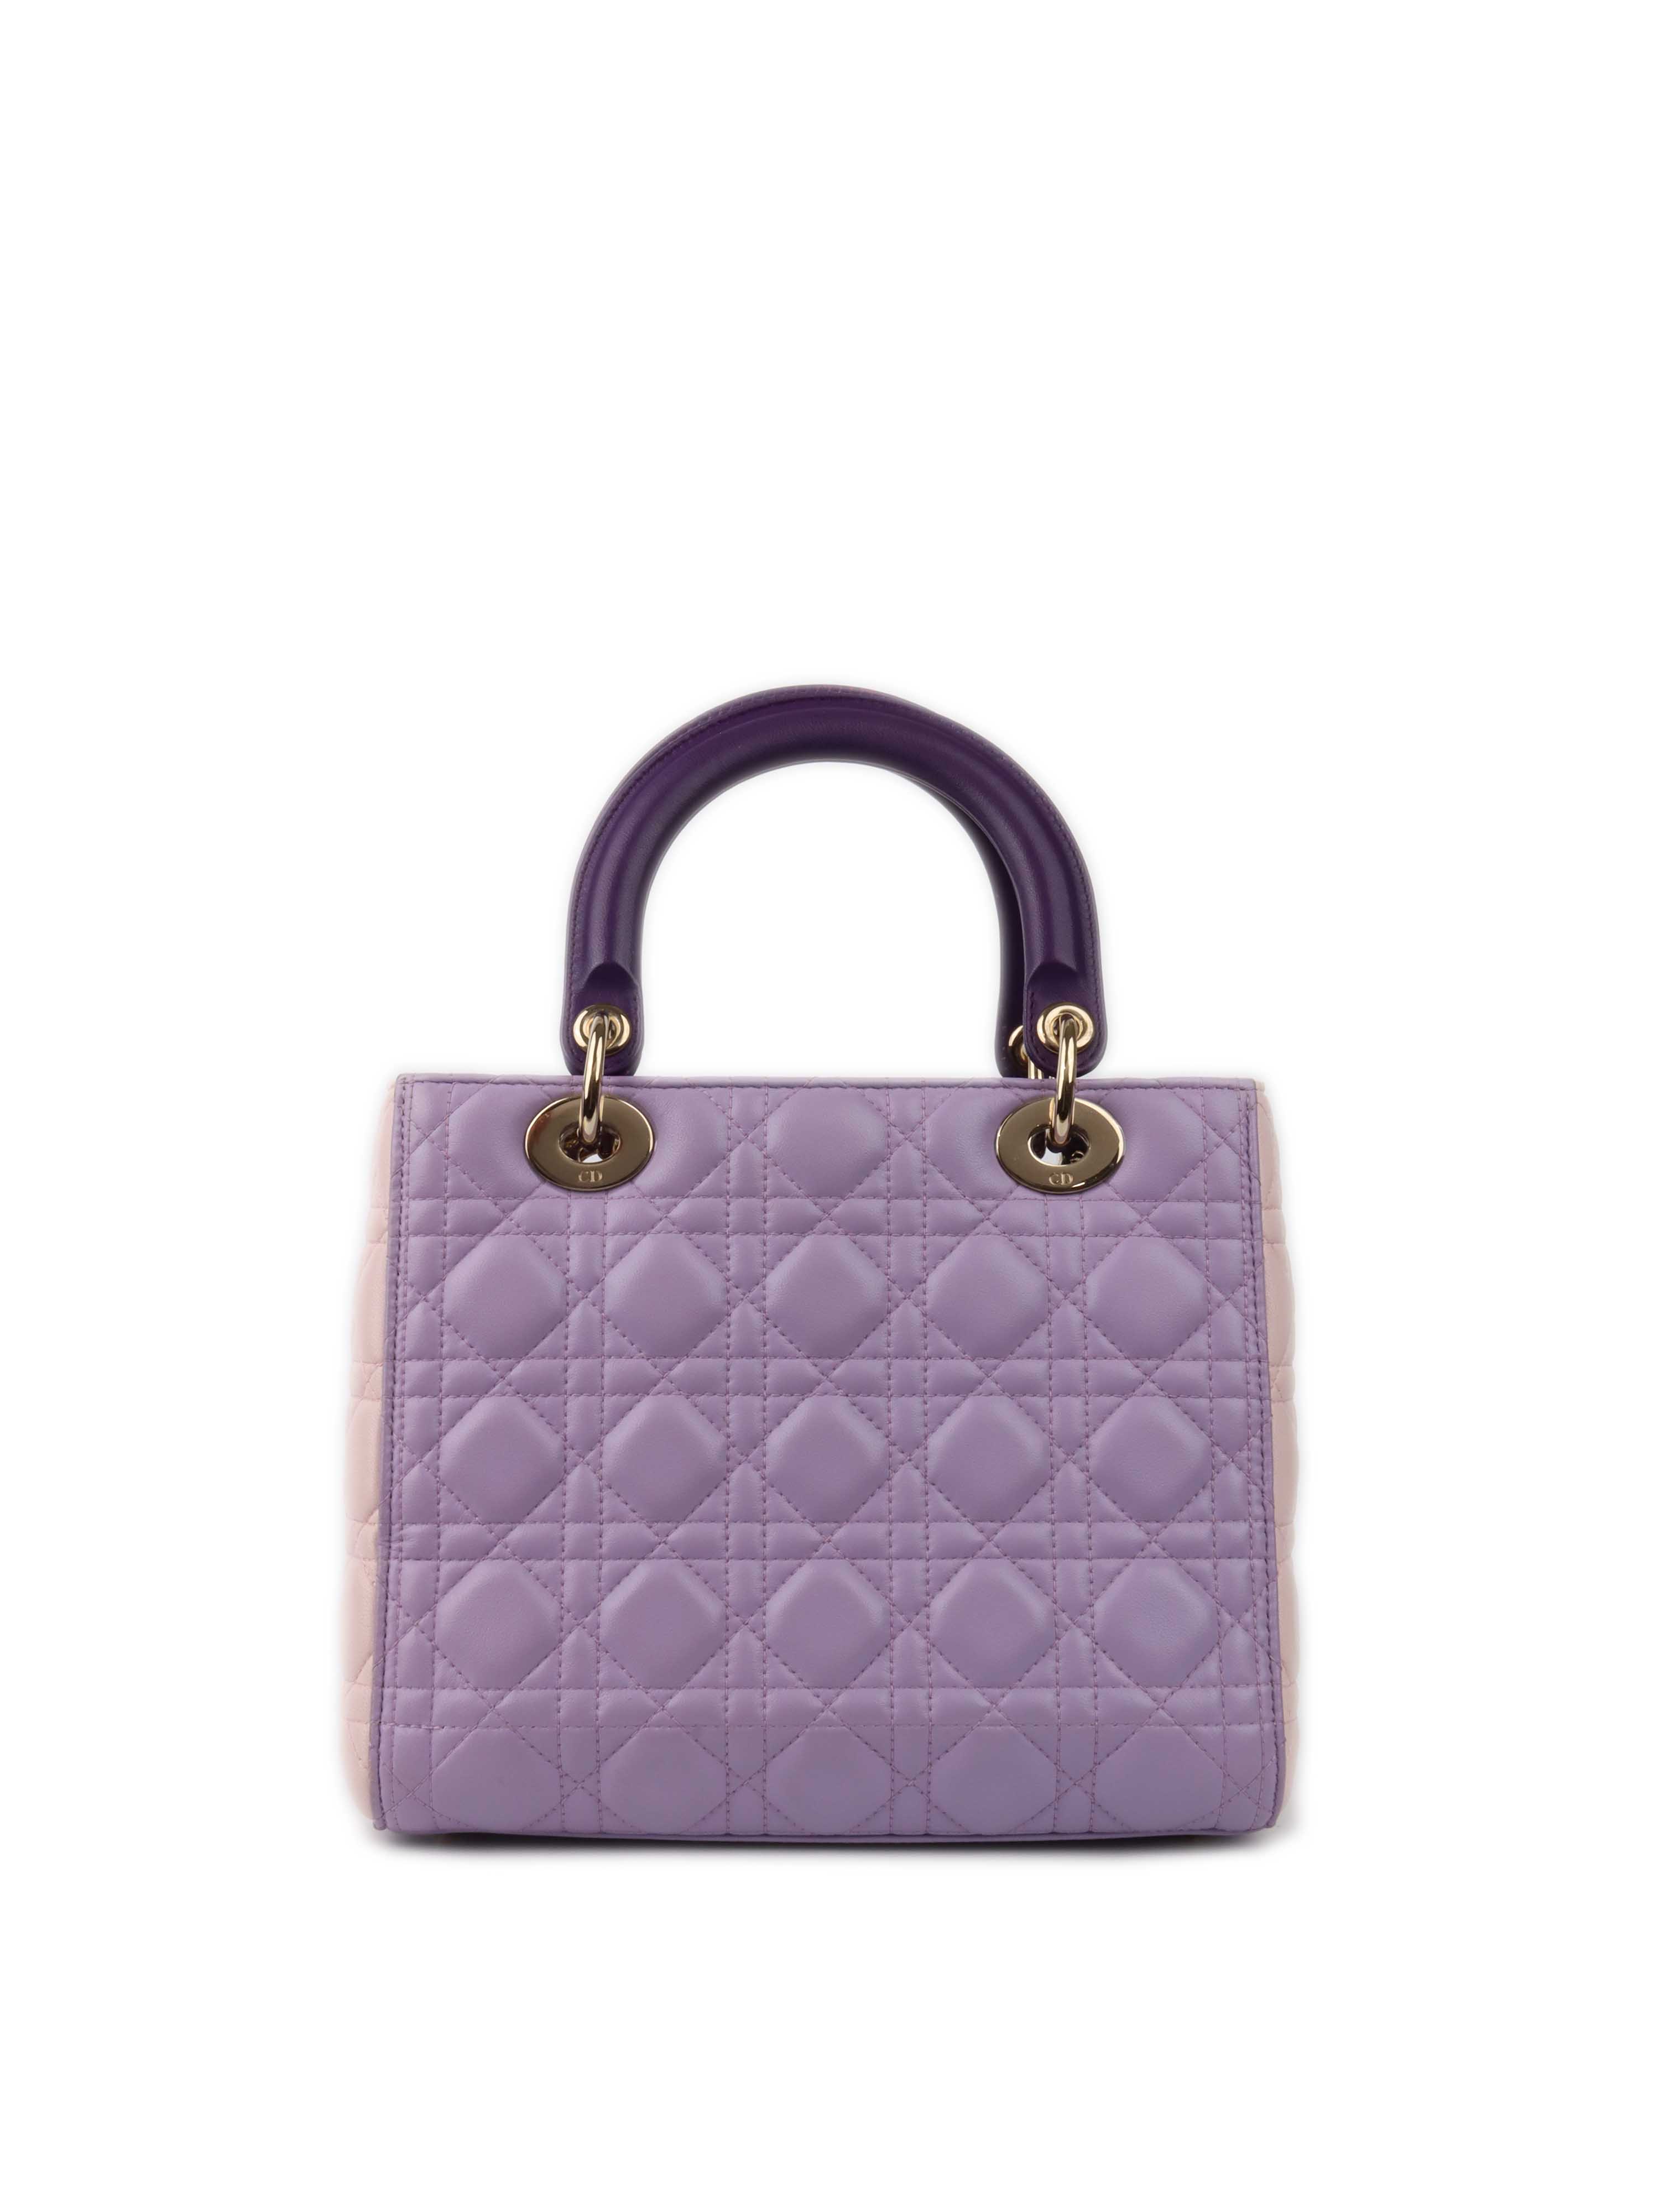 Christian Dior Purple Lambskin Limited Edition Lady Dior.